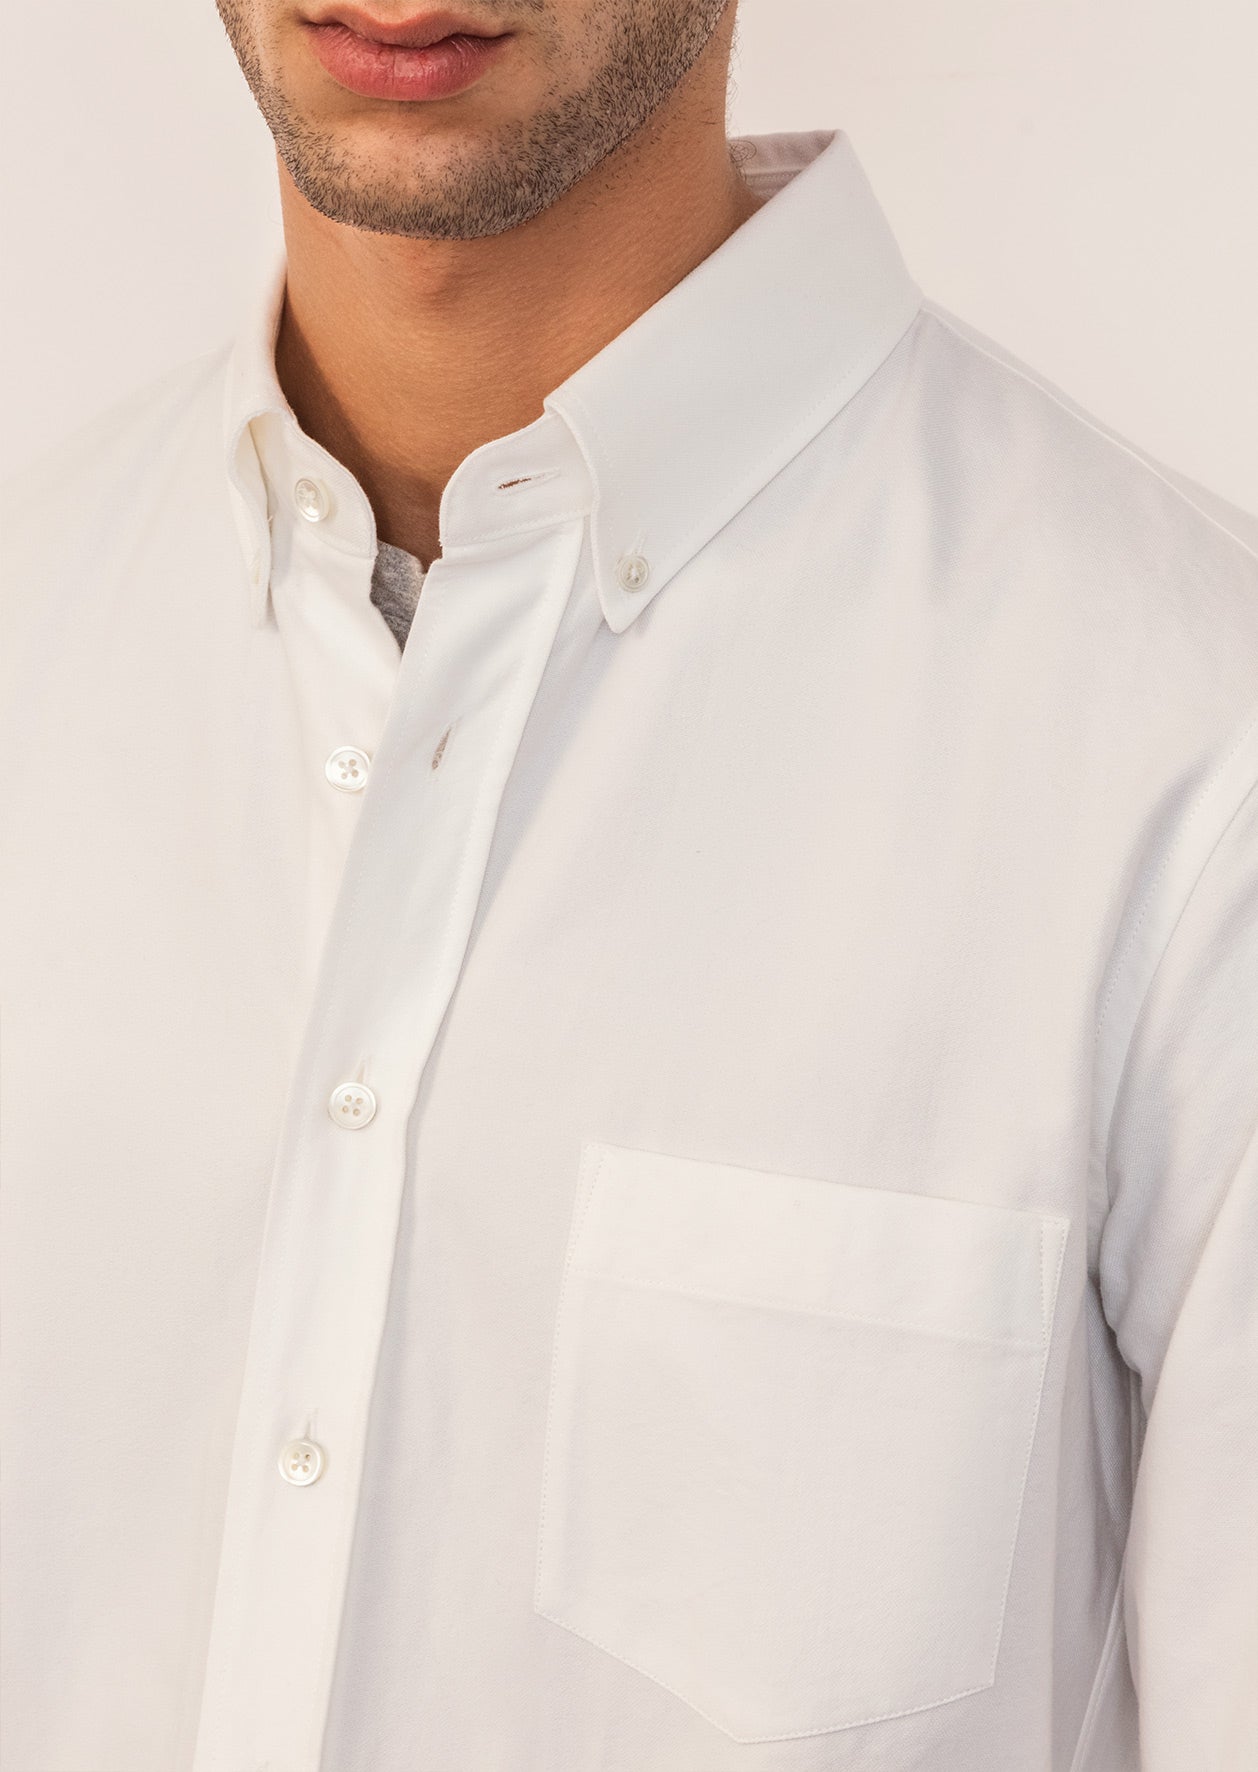 Permanent - Buttondown shirt - Organic oxford cotton - White